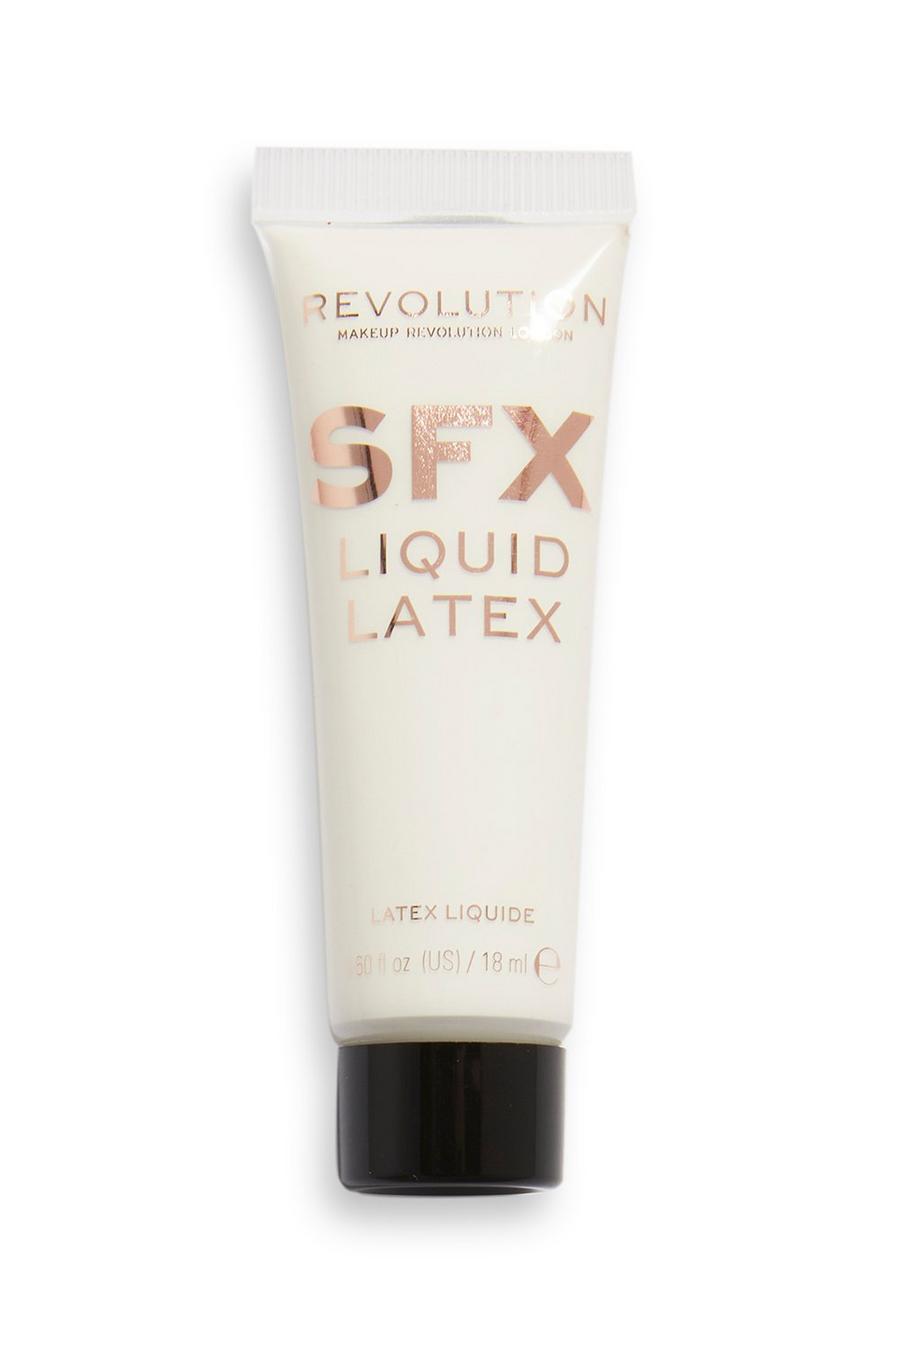 Revolution - Latex liquide - Creator SFX, Red image number 1